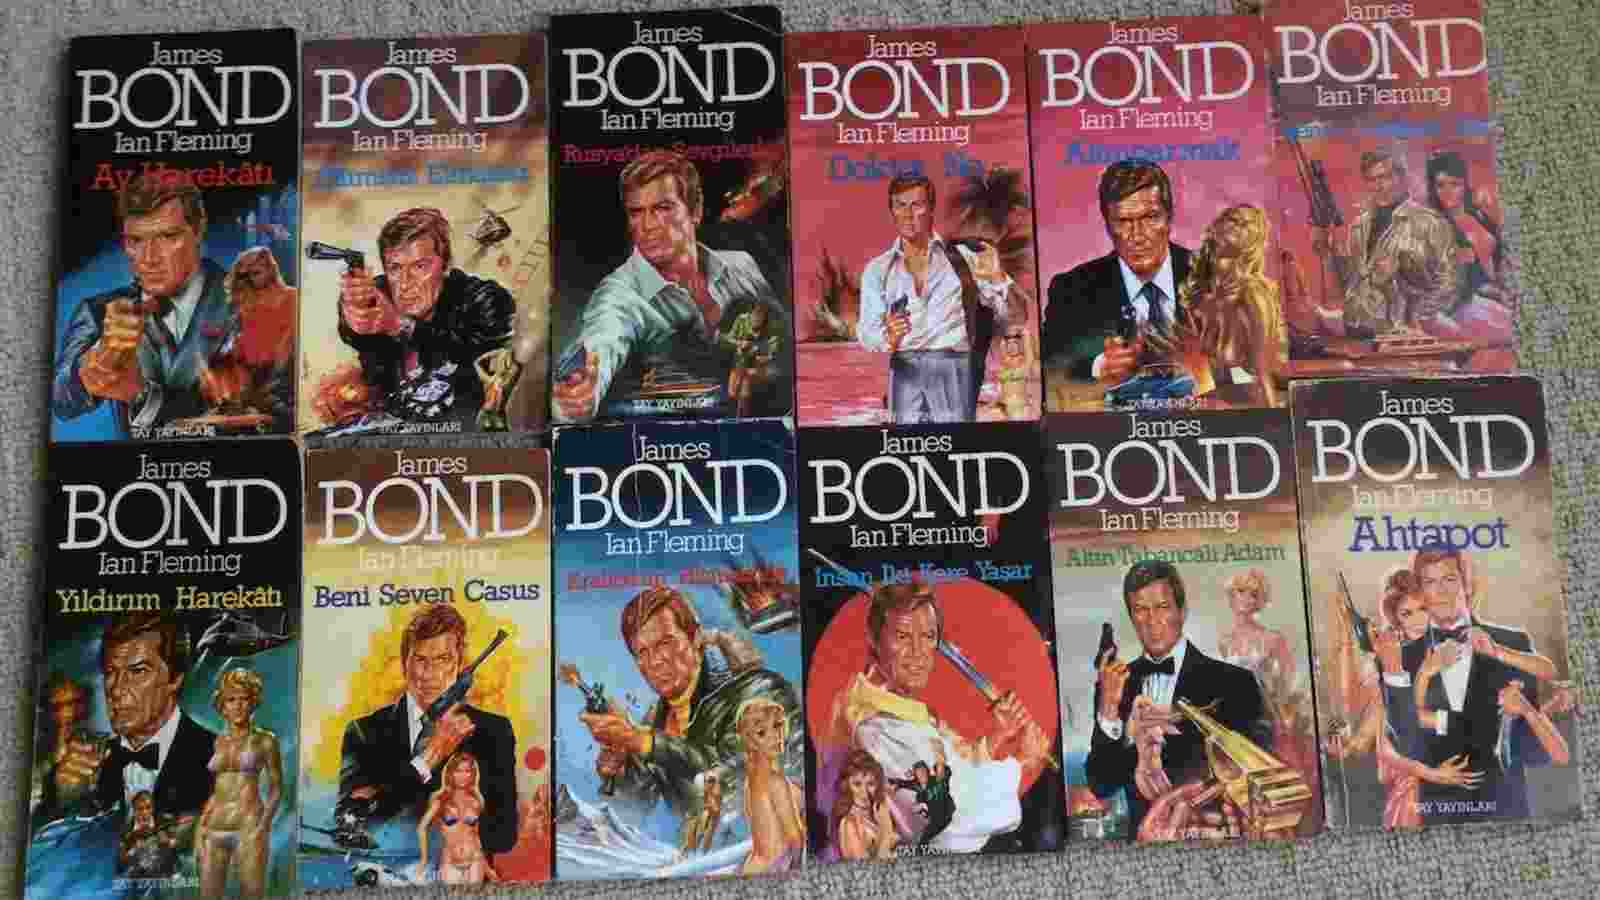 Ian's Bond series books